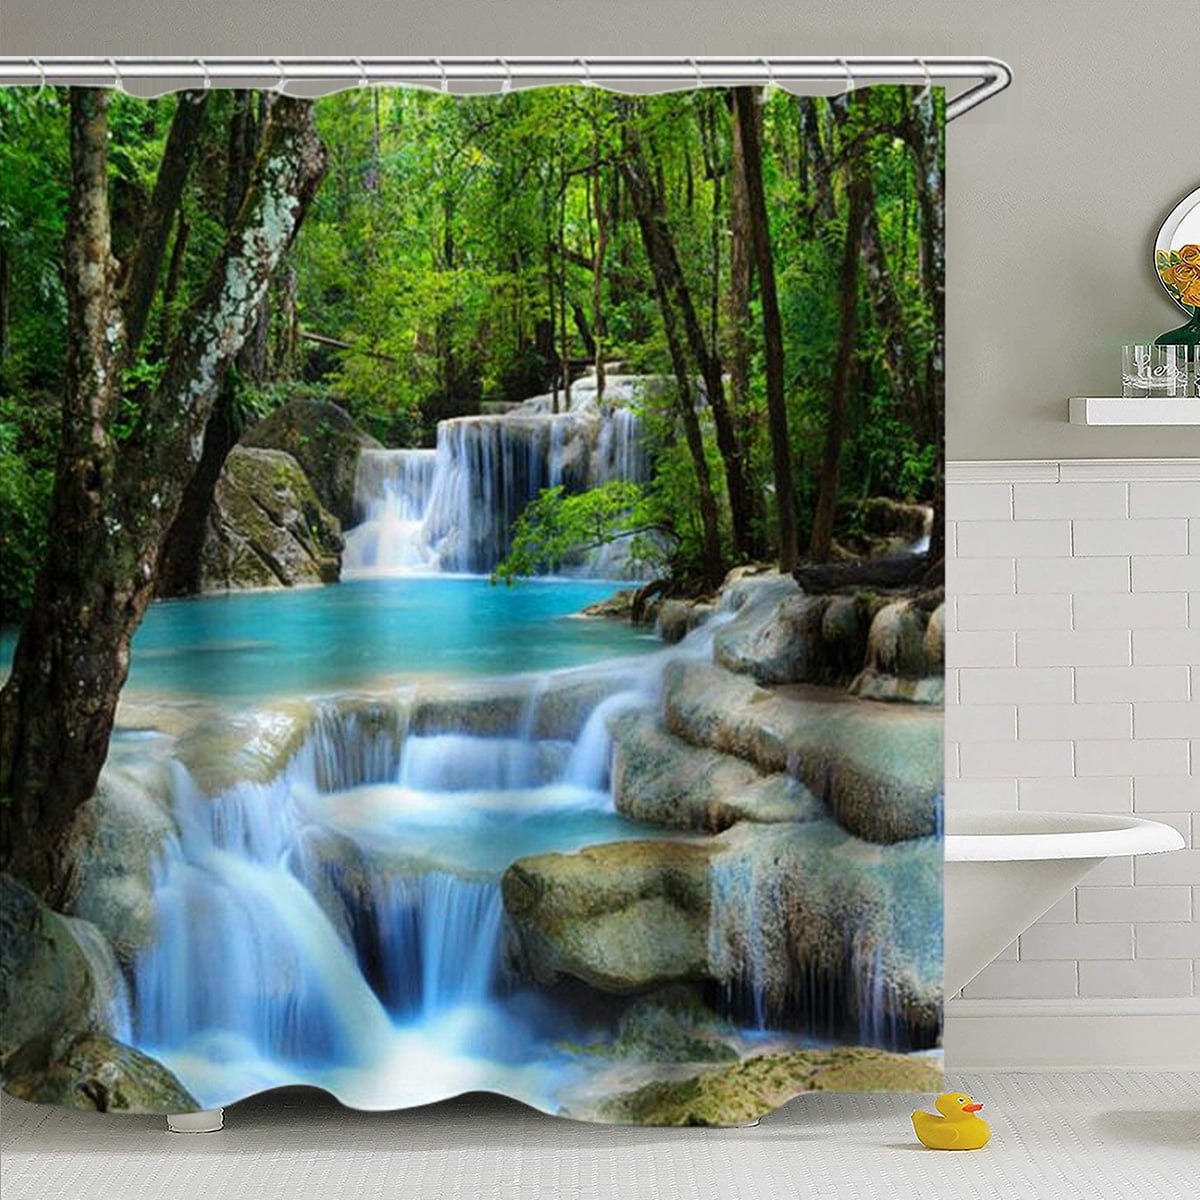 3D Waterfall Shower Curtain Non-Slip Bathroom Decor Toilet Cover Lid Rug Mat 